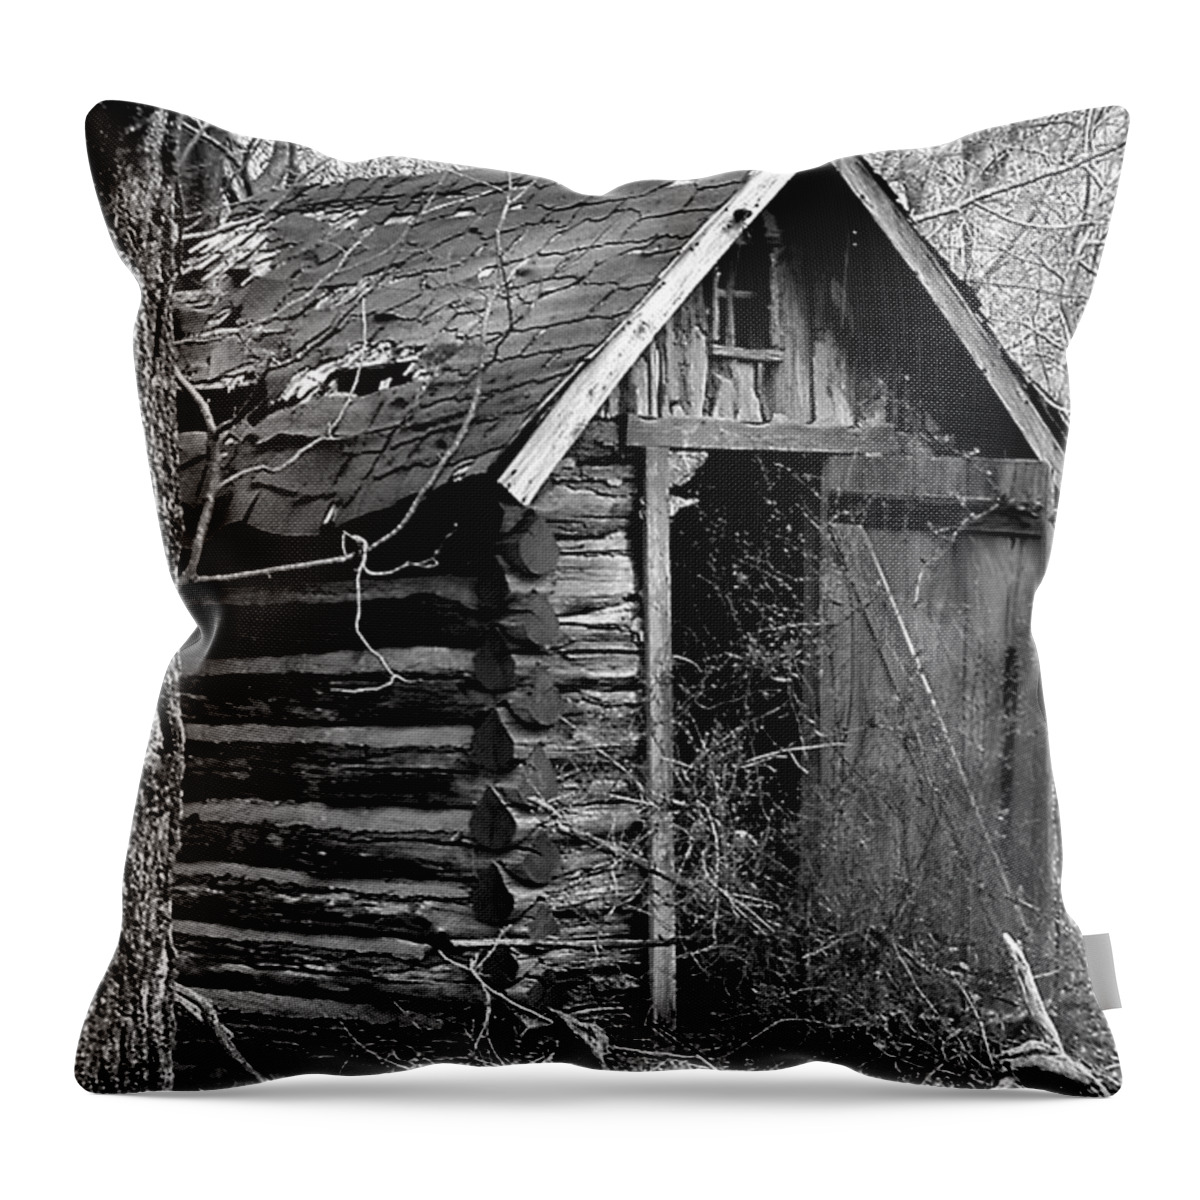 Ansel Adams Throw Pillow featuring the photograph WinslowLogOuthouse-11x17 by Curtis J Neeley Jr